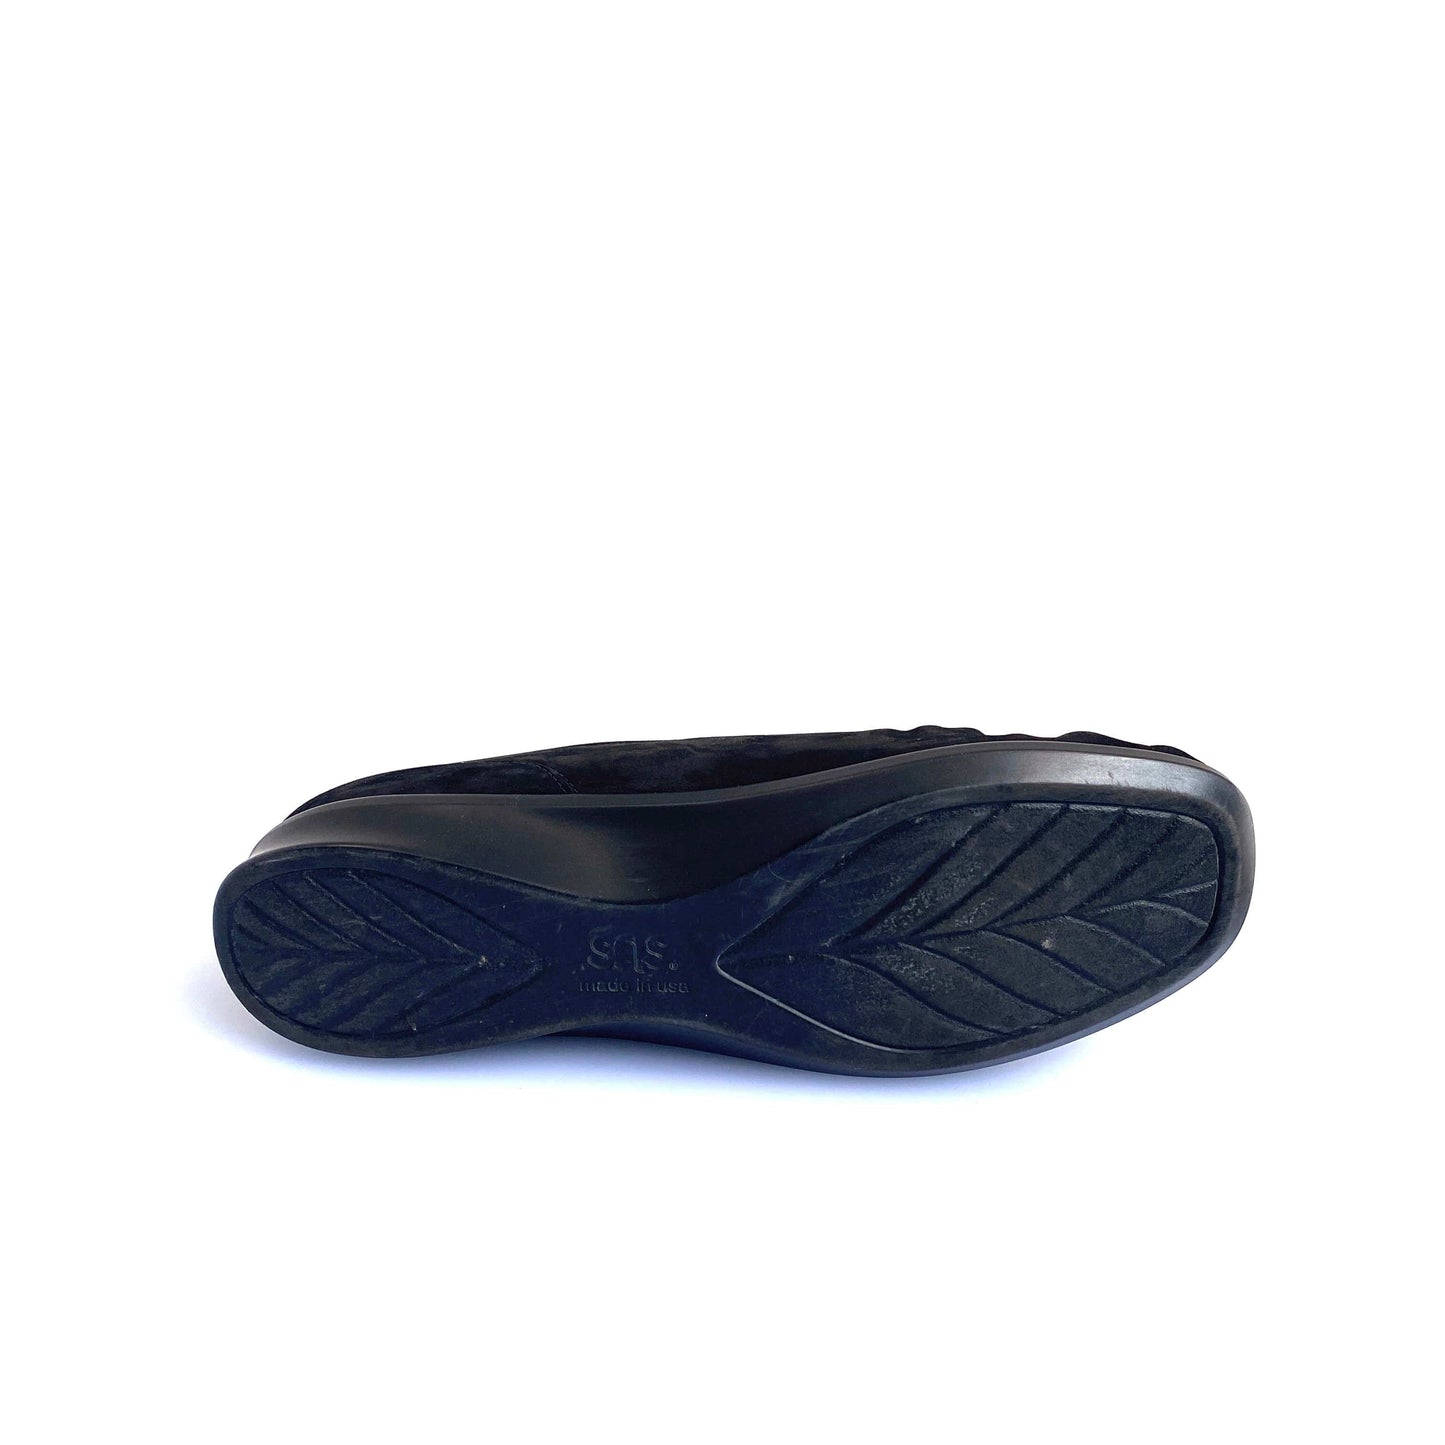 SAS Womens Petra Lace-Up Loafer Size 11 Charcoal Black Leather Shoes Tripad Comfort Walking EUC